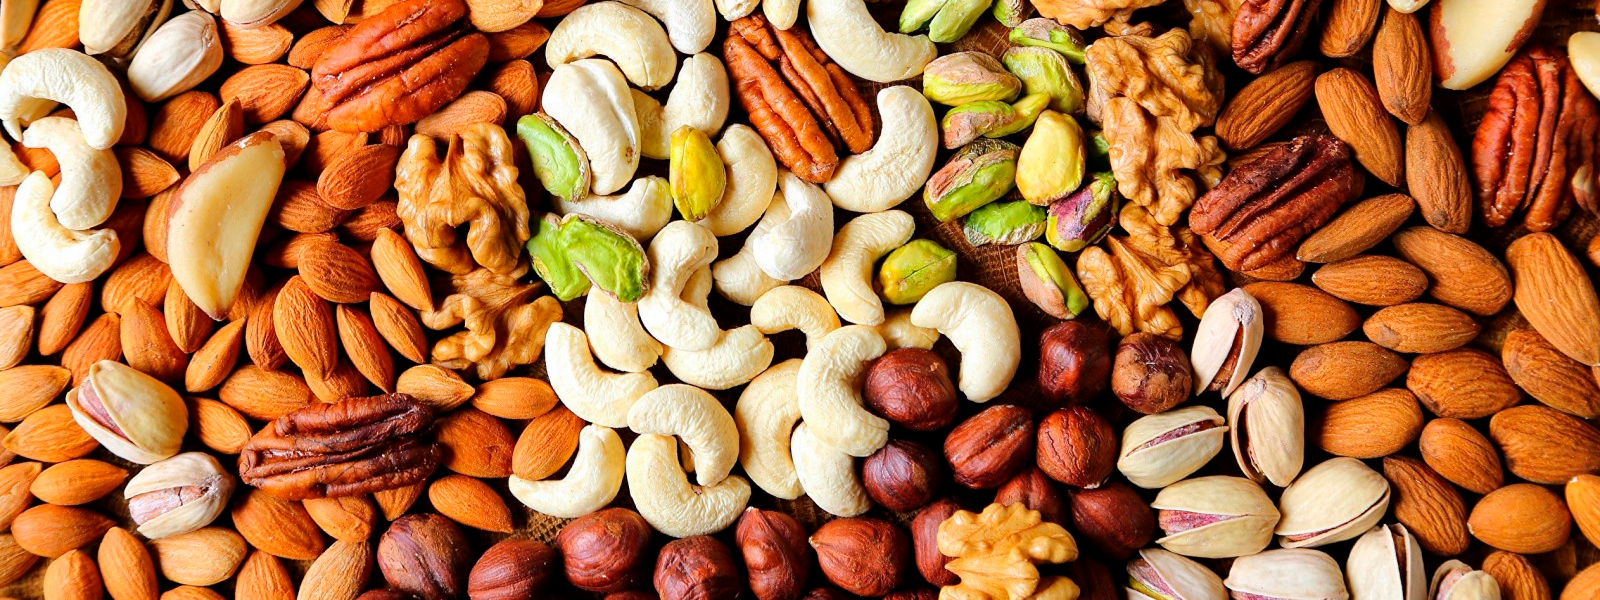 banner-carino-ingredients-nuts-peanuts-brazilian-almonds-hazelnuts